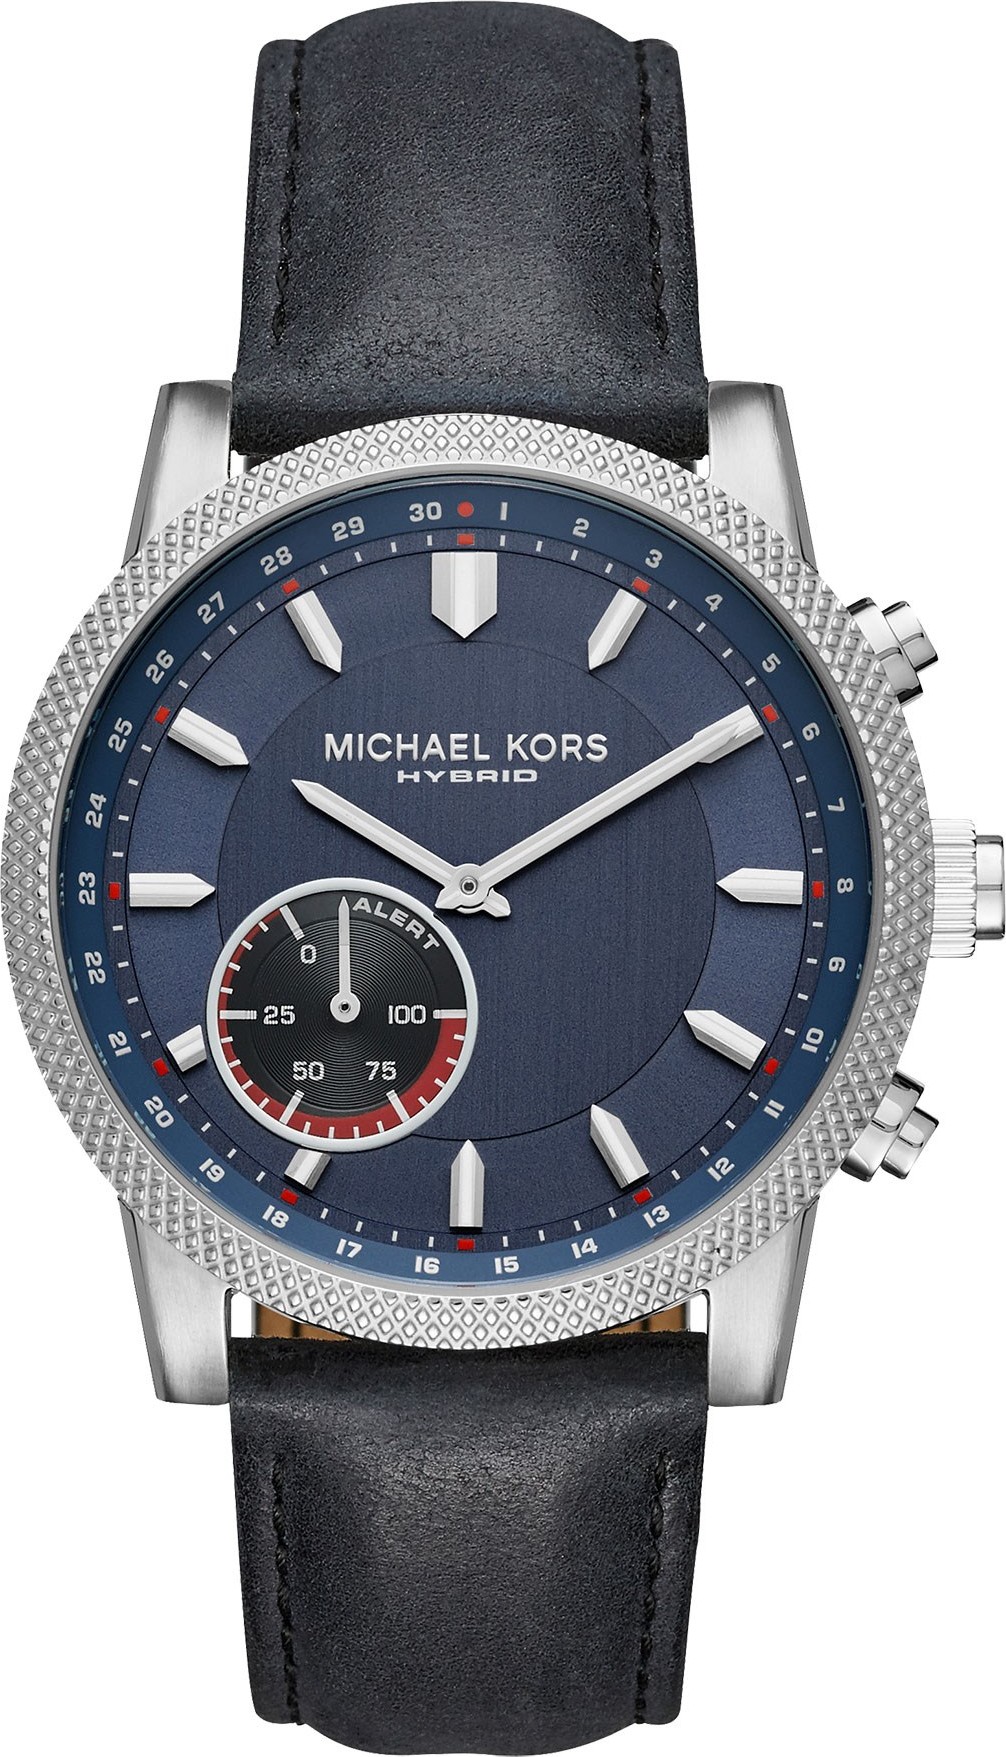 Michael Kors MKT4005 Slim Runway Hybrid Smartwatch  WatchesnJewellerycom